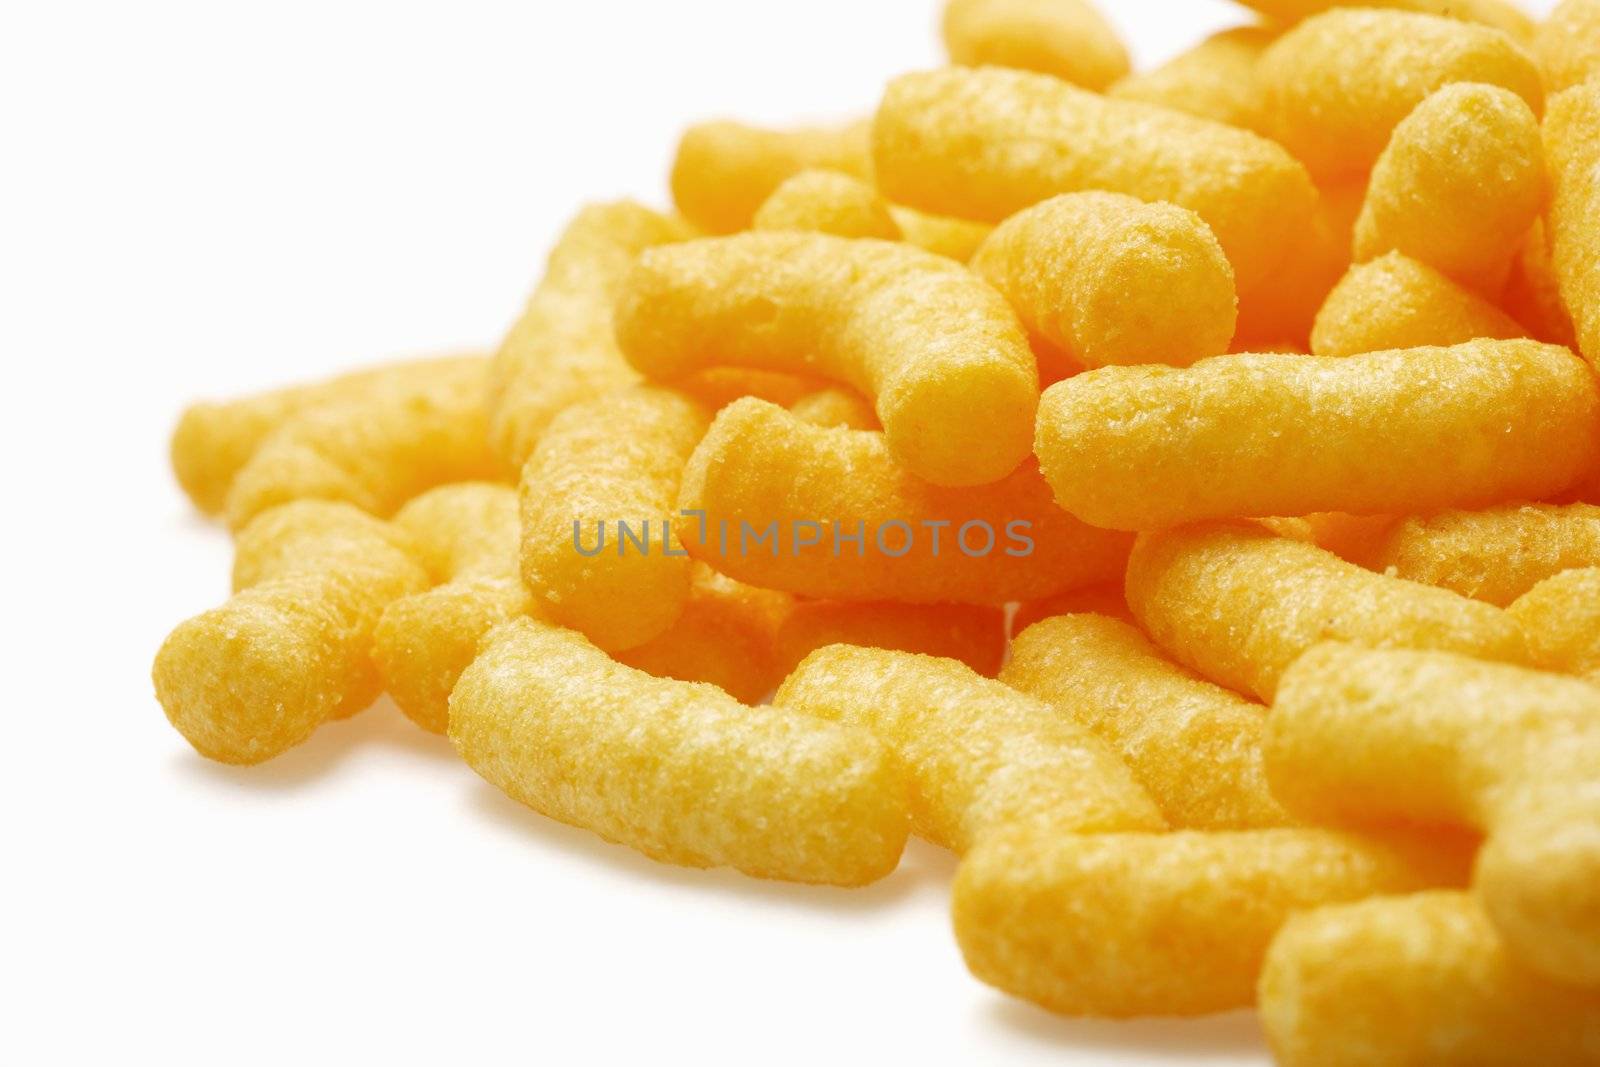 Cheese flavored potato snacks